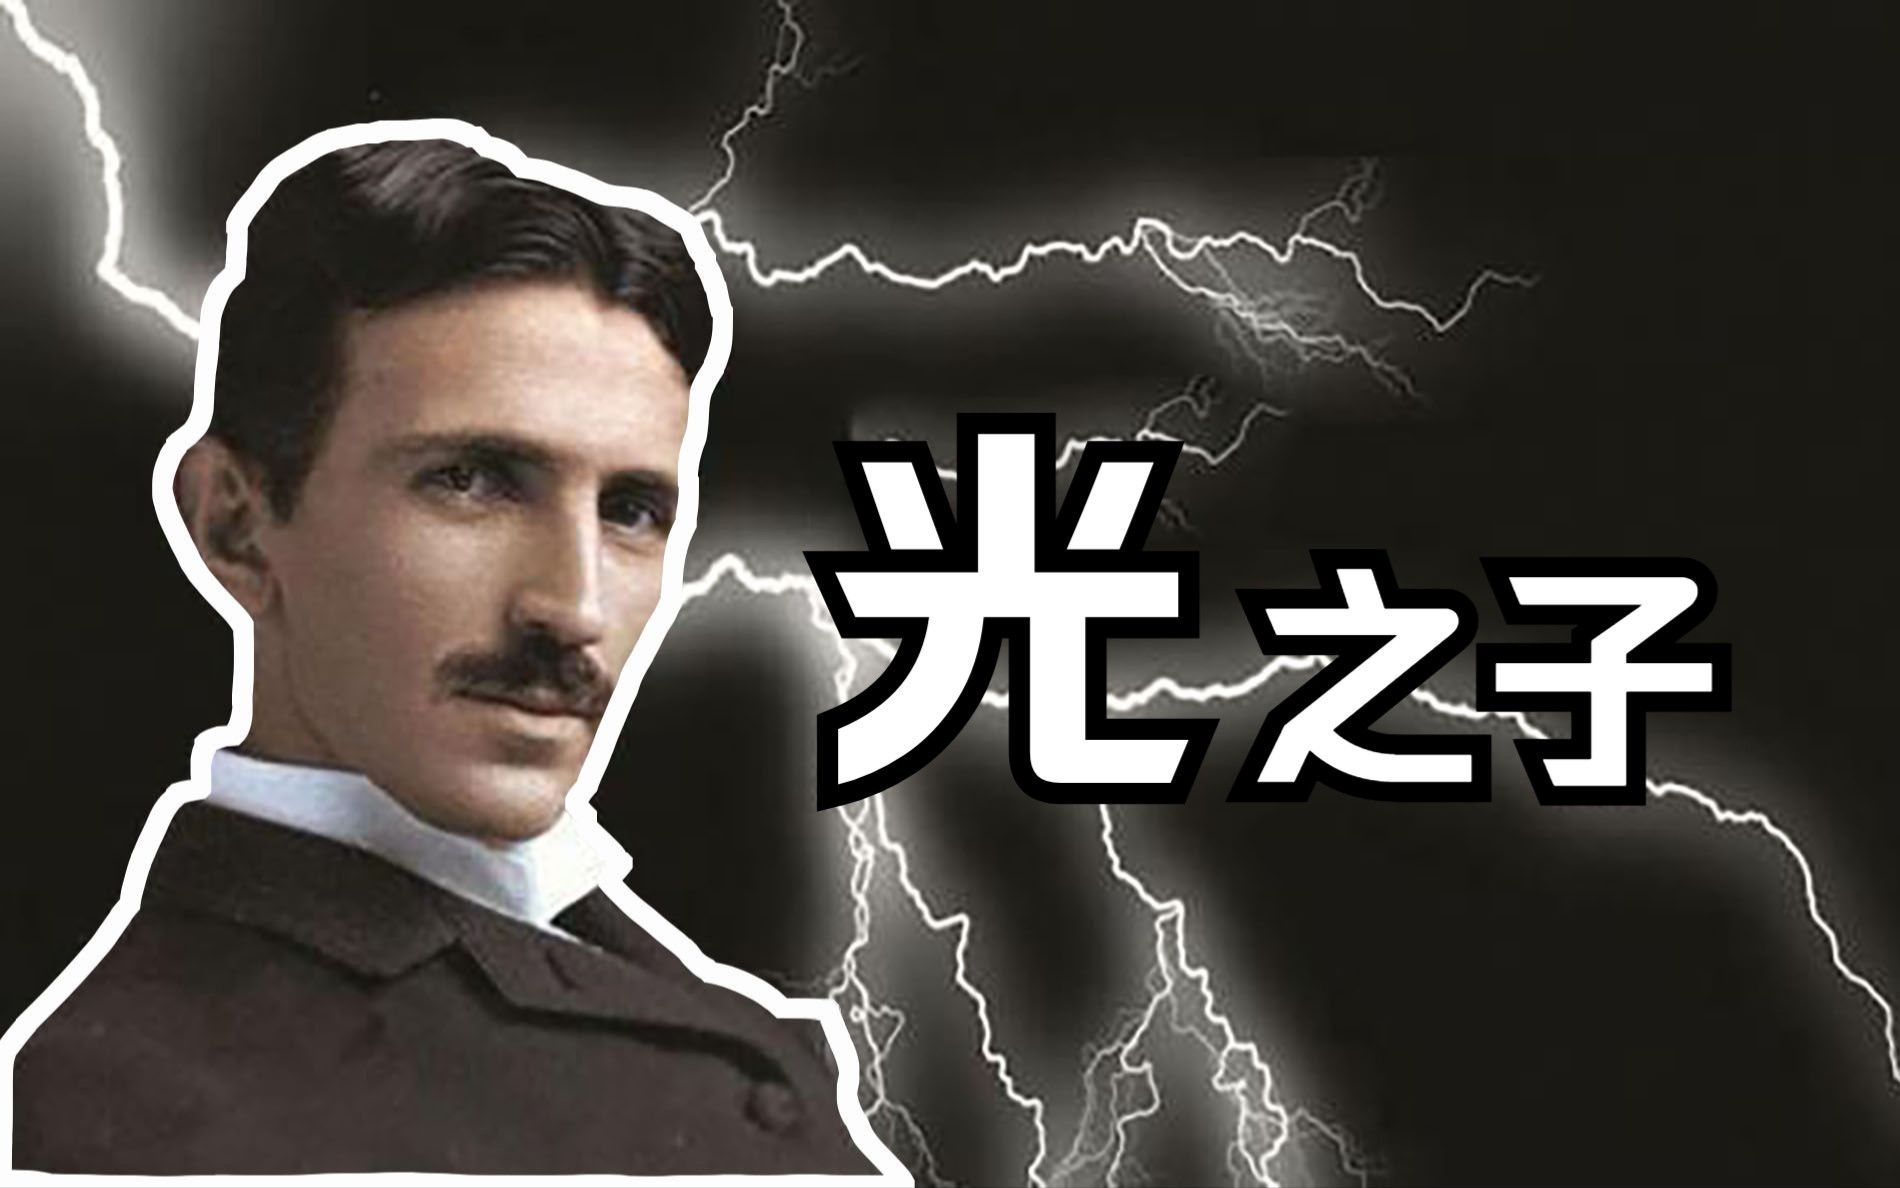 Nikola Tesla pionero del futuro | ConvivirPress